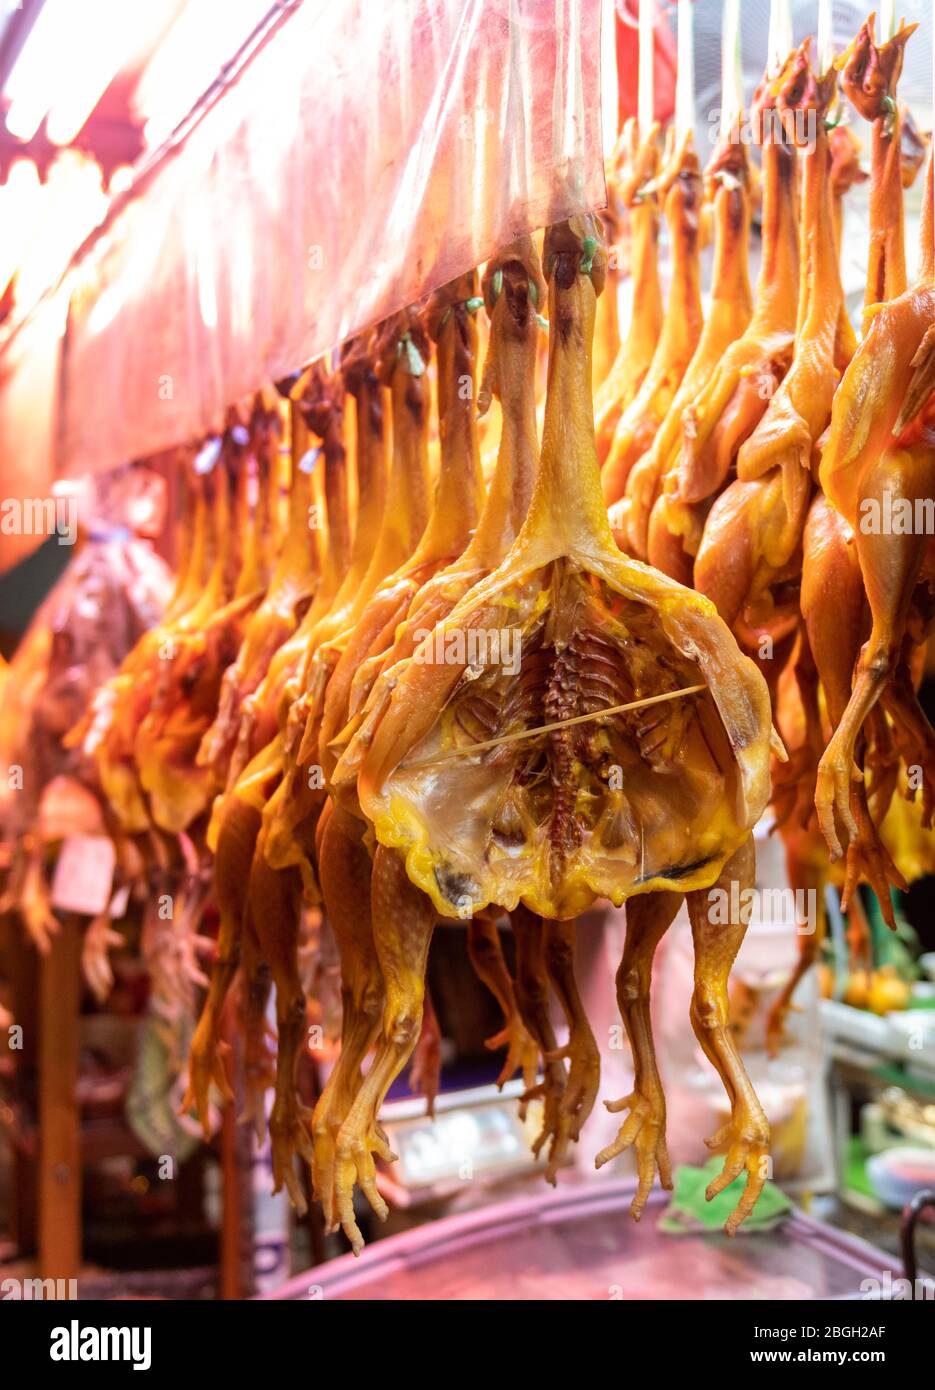 Hongkong, China: 13. Feb. 2020. Getrocknete flache Hühner hängen in einem Straßenladen in Hong Kong Jayne Russell/Alamy Stock Image Stockfoto